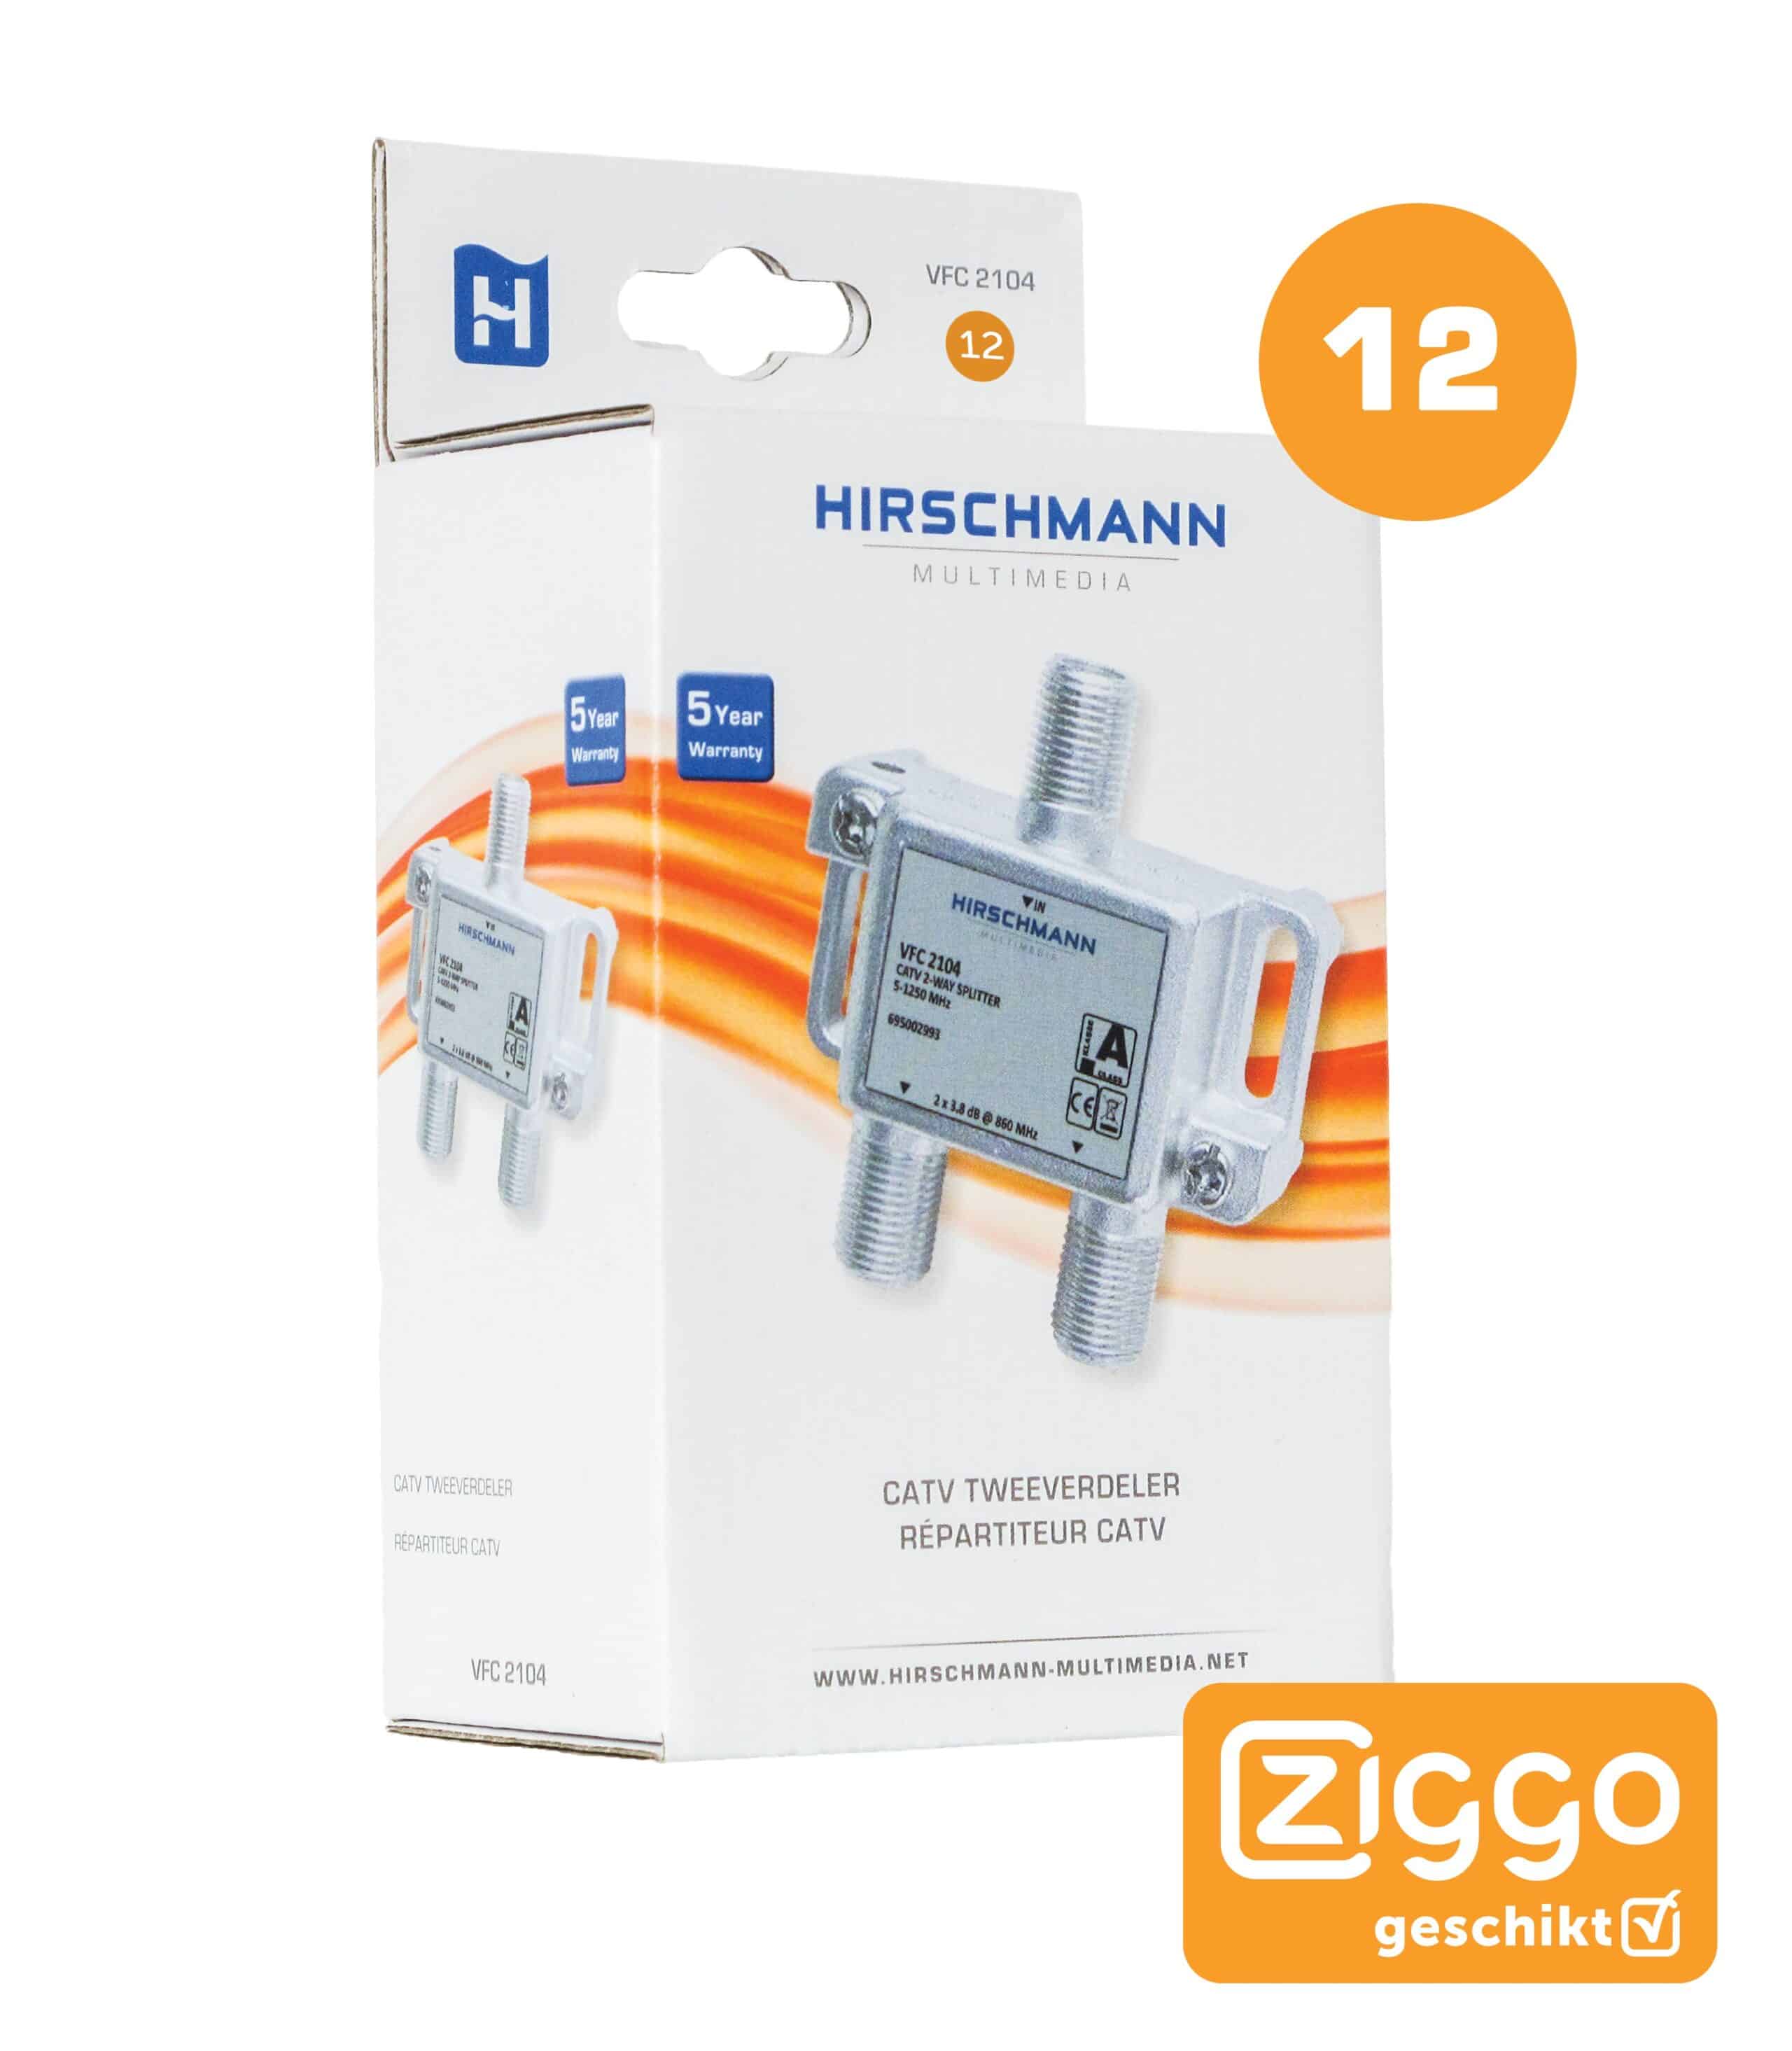 Hirschmann Vfc 2104 Tweeverdeler Van 3 8 Db Retailverpakking Compu Aid